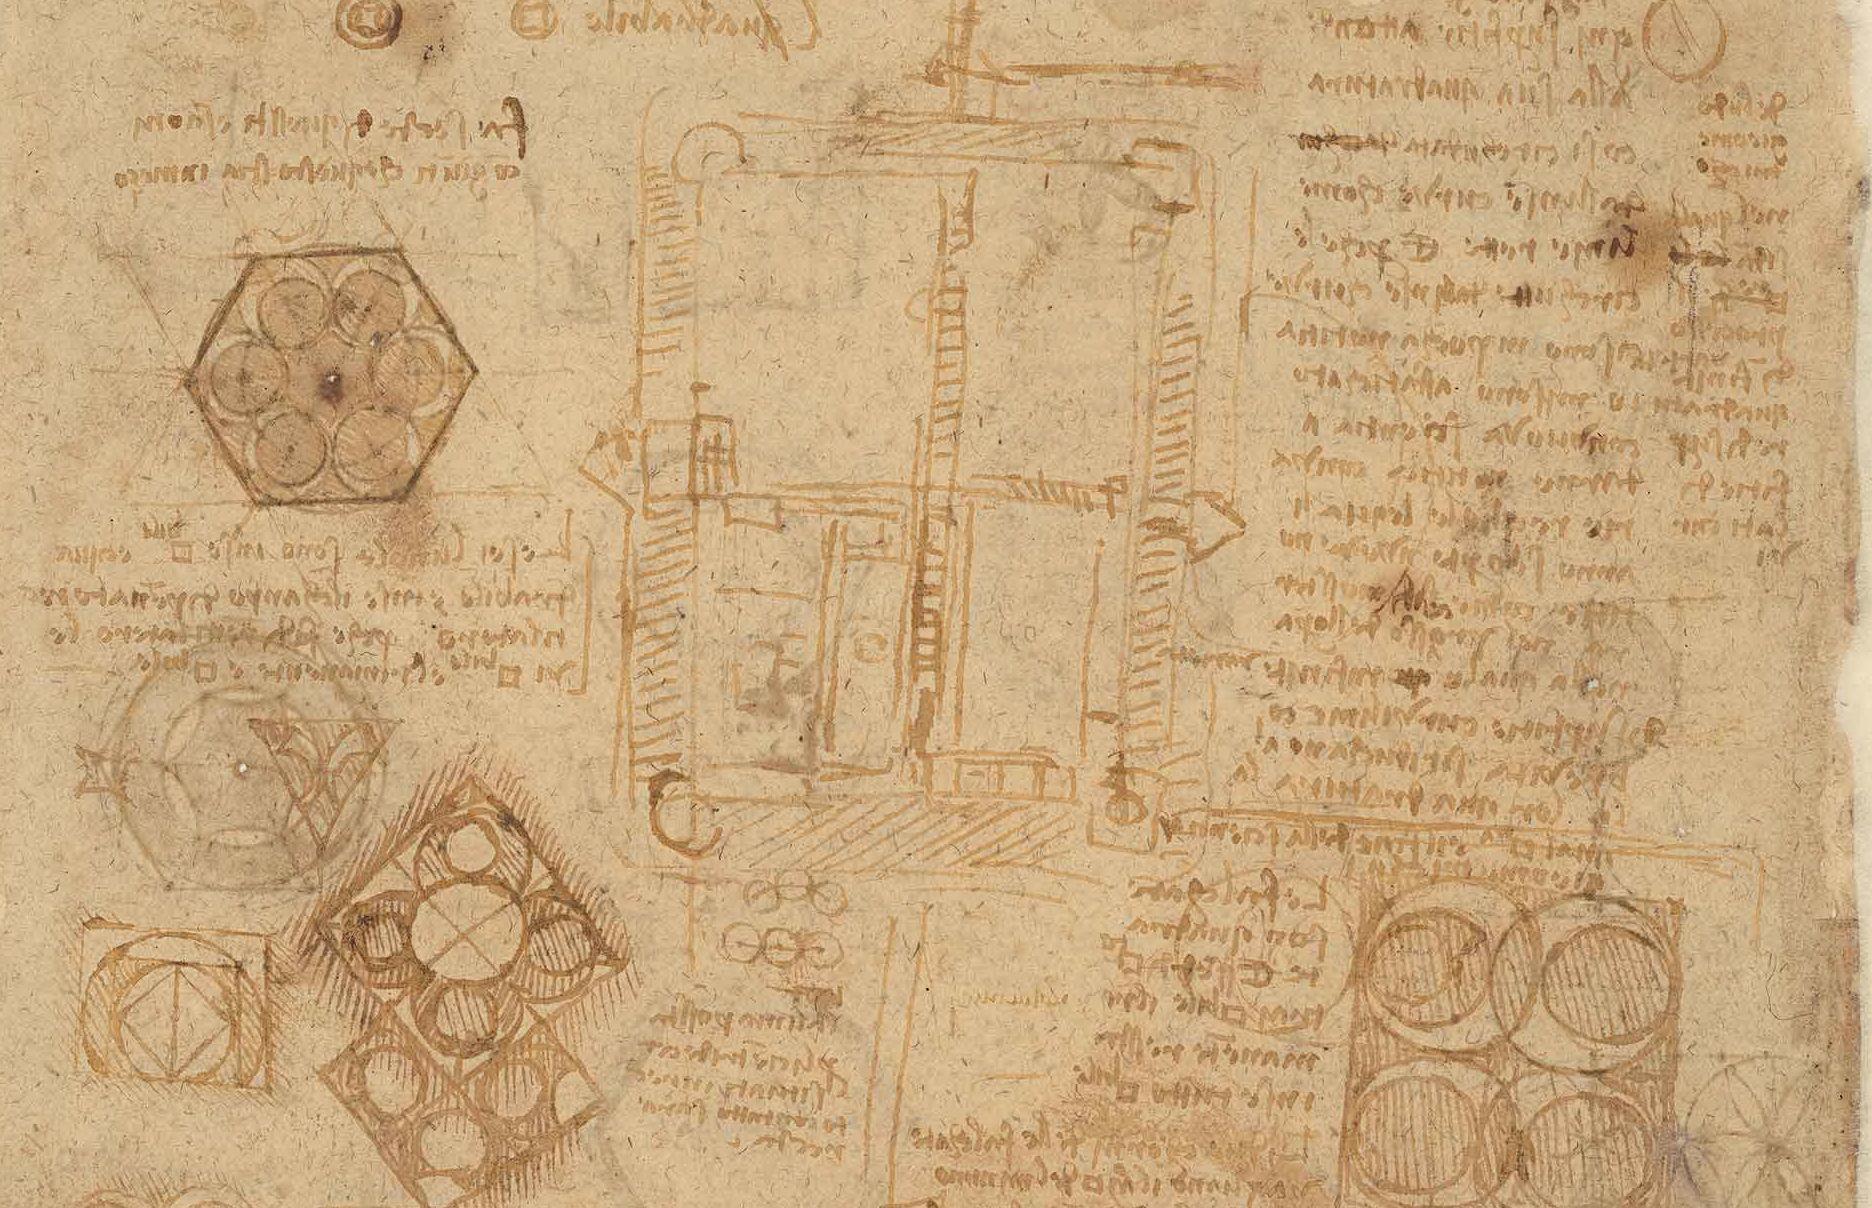 Photo of a page of Leonardo da Vinci's Codex Atlanticus showing text and diagrams